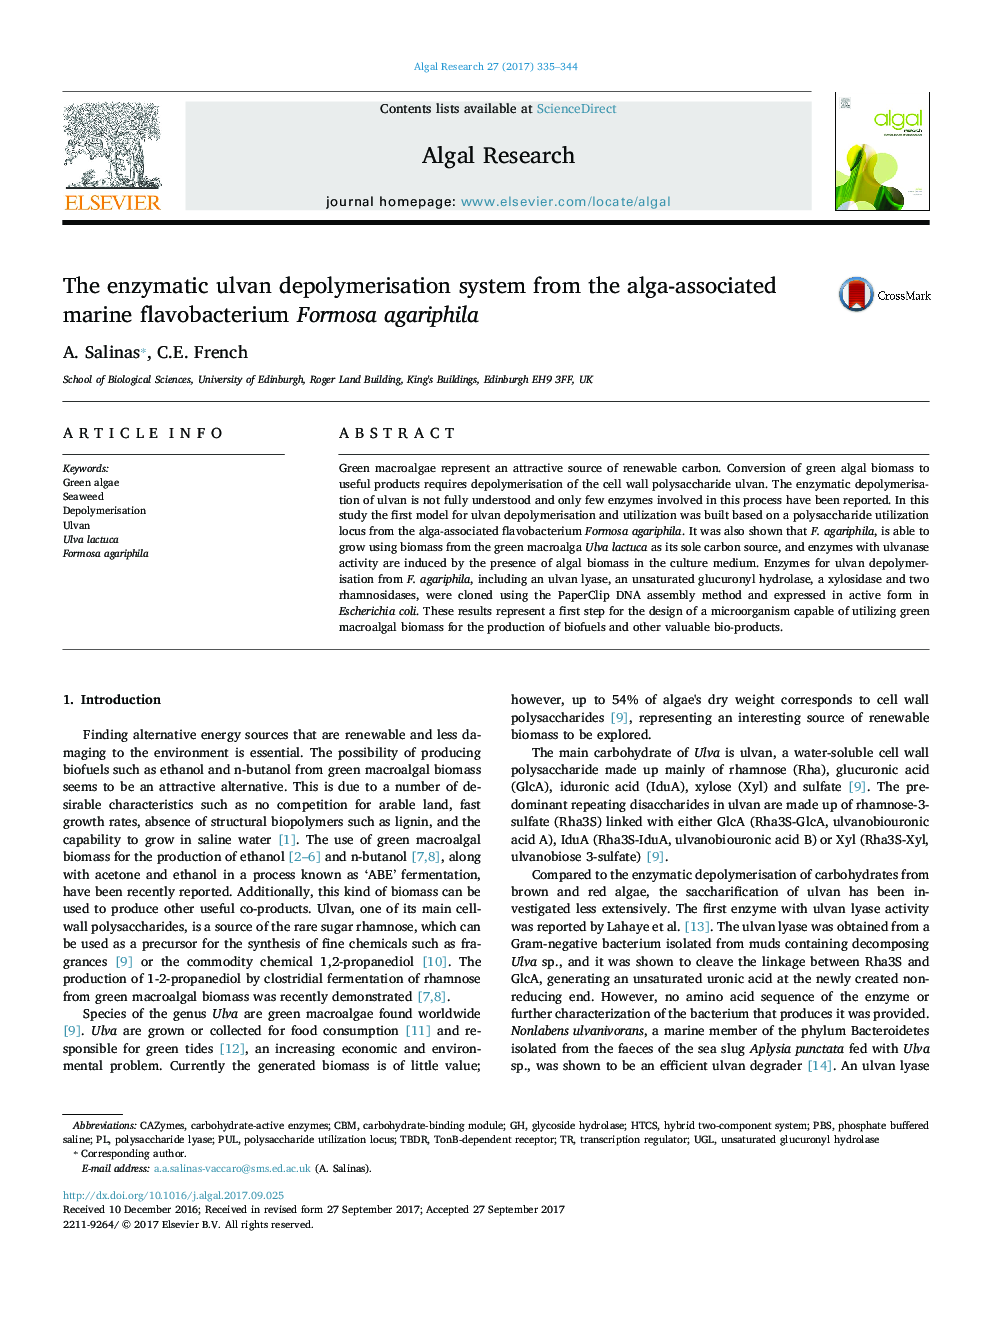 The enzymatic ulvan depolymerisation system from the alga-associated marine flavobacterium Formosa agariphila